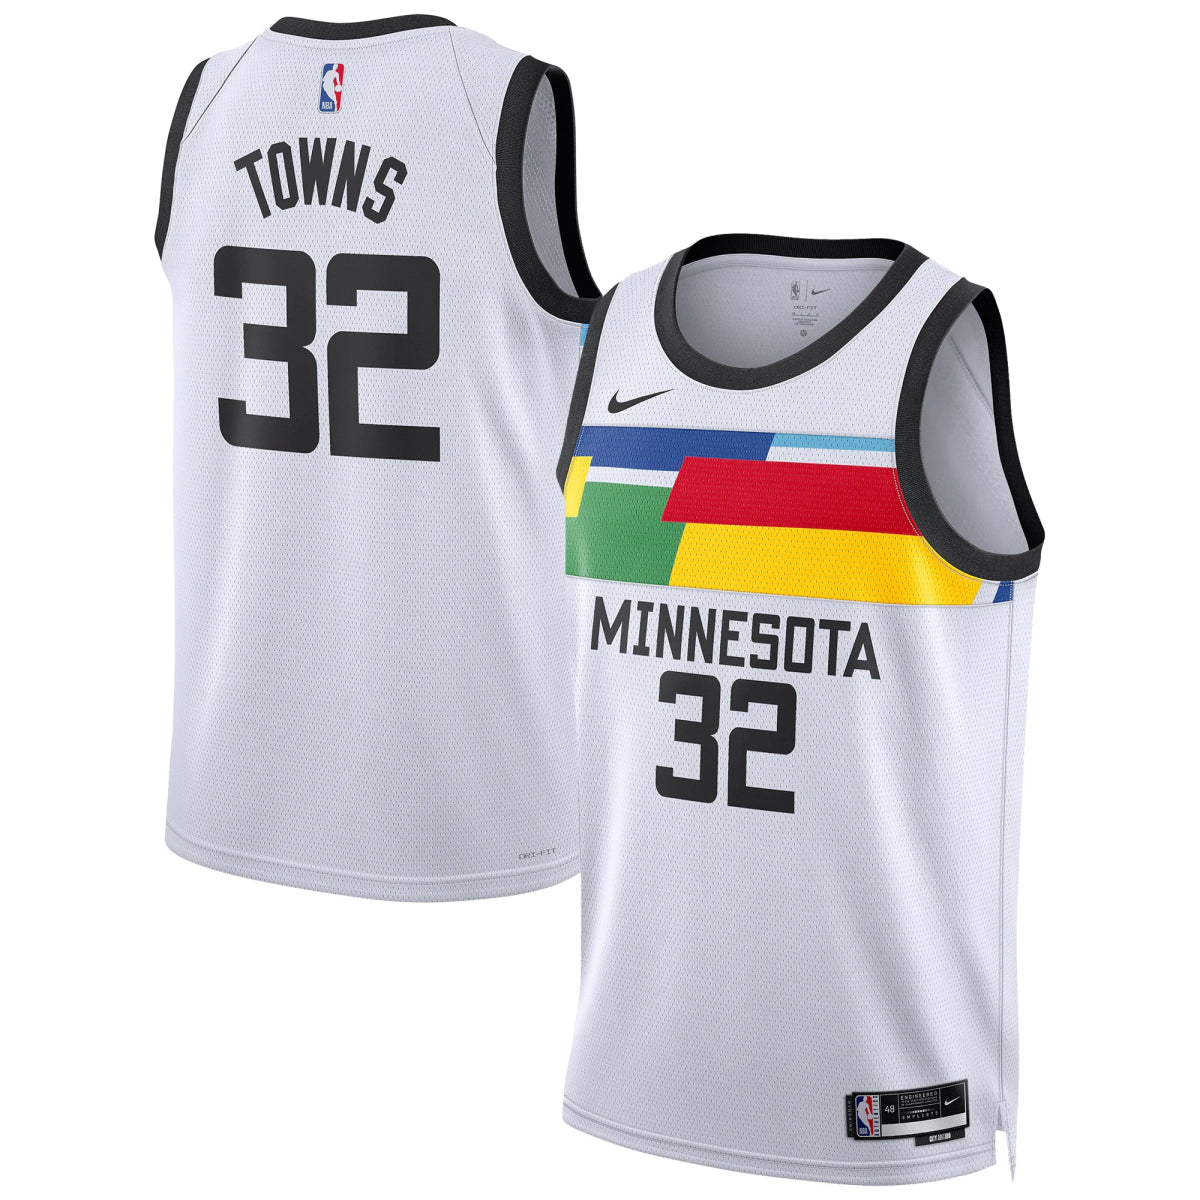 Minnesota Timberwolves introduce new City Edition uniform for 2023